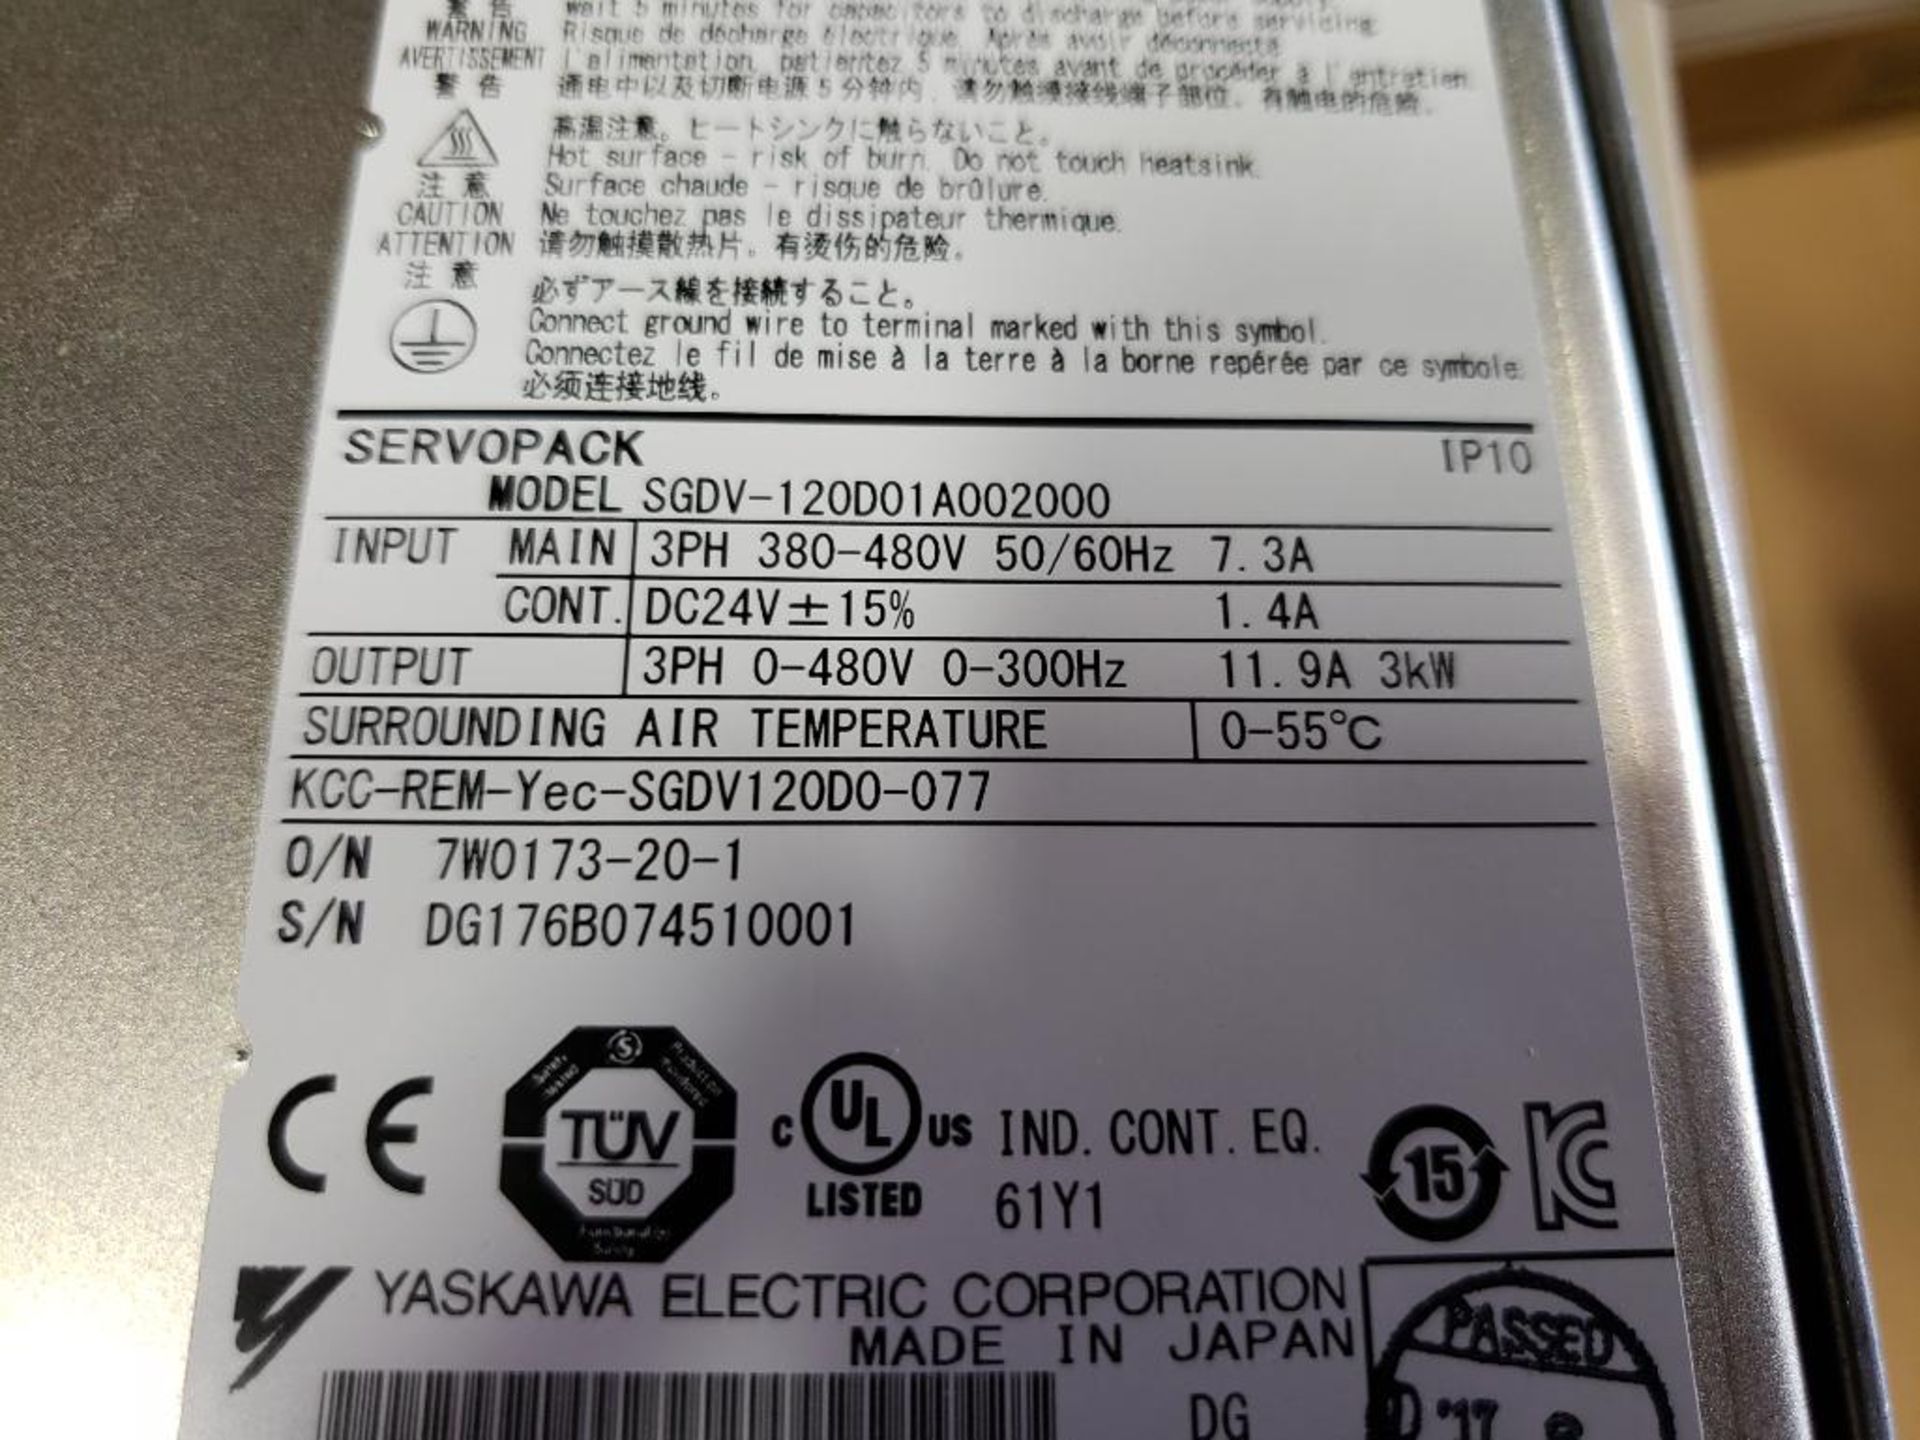 Yasakawa servopack drive. Model SGDV-120D01A002000. - Image 6 of 6